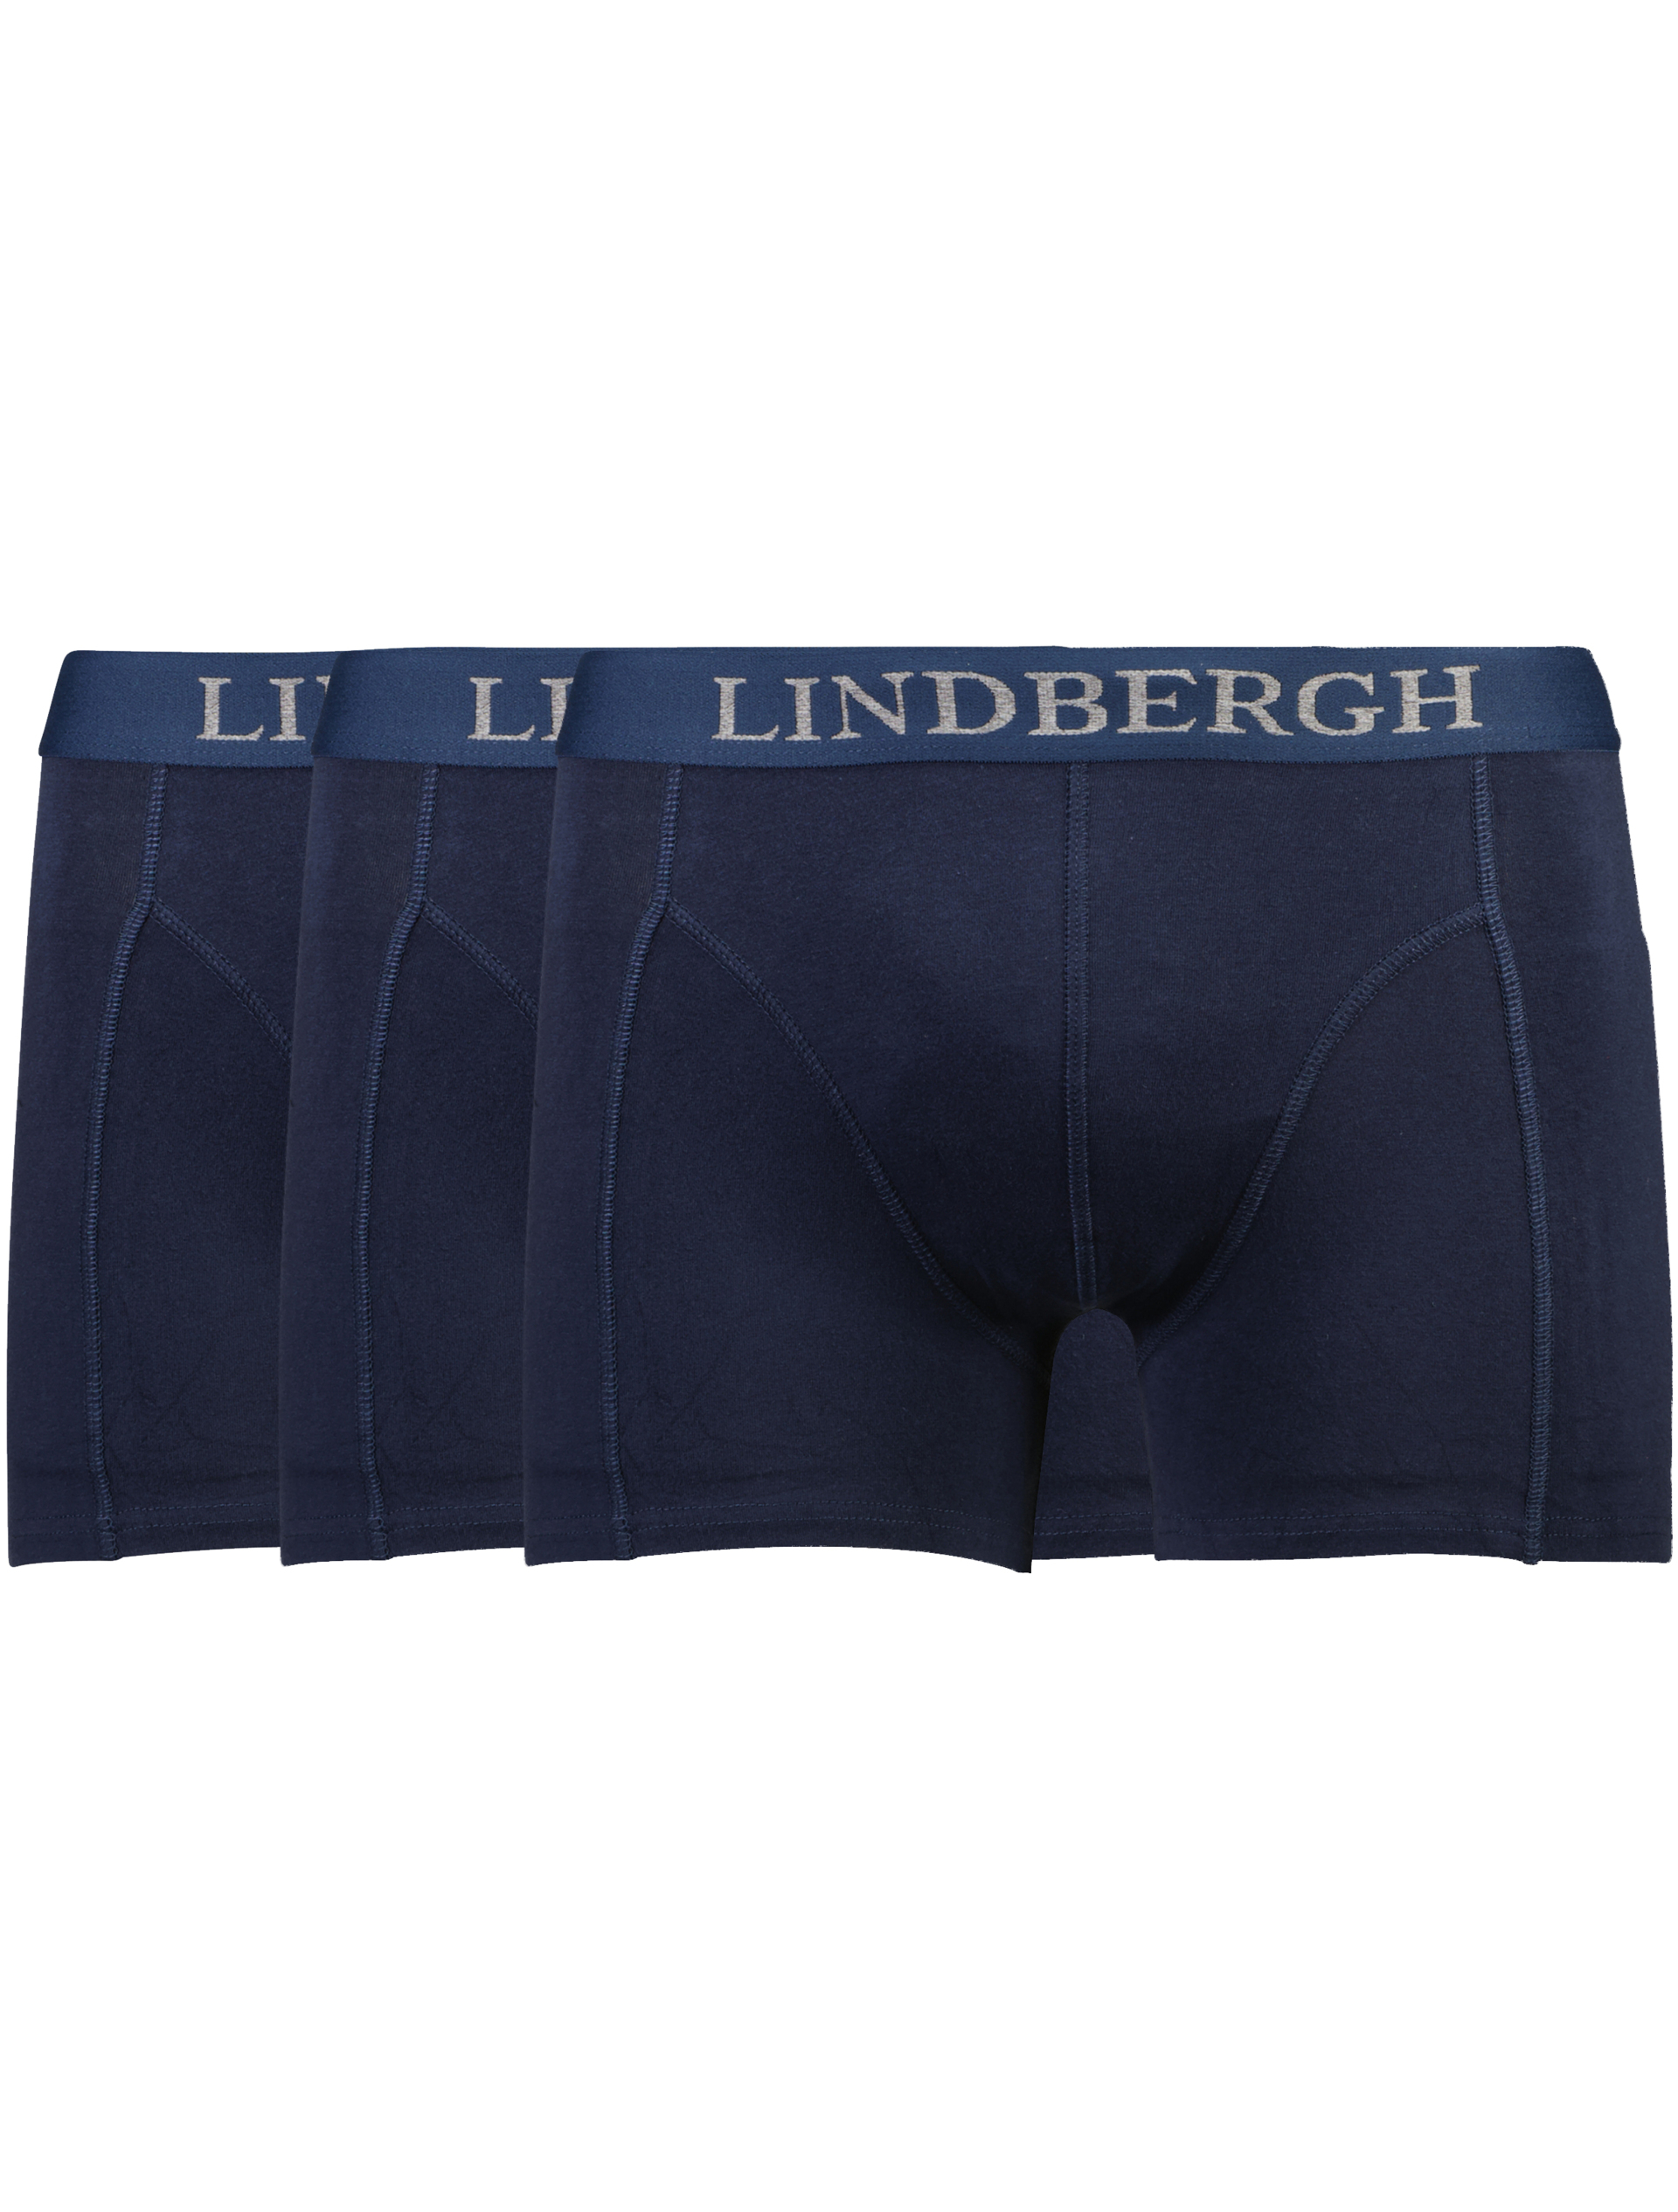 Lindbergh Unterhose blau / navy